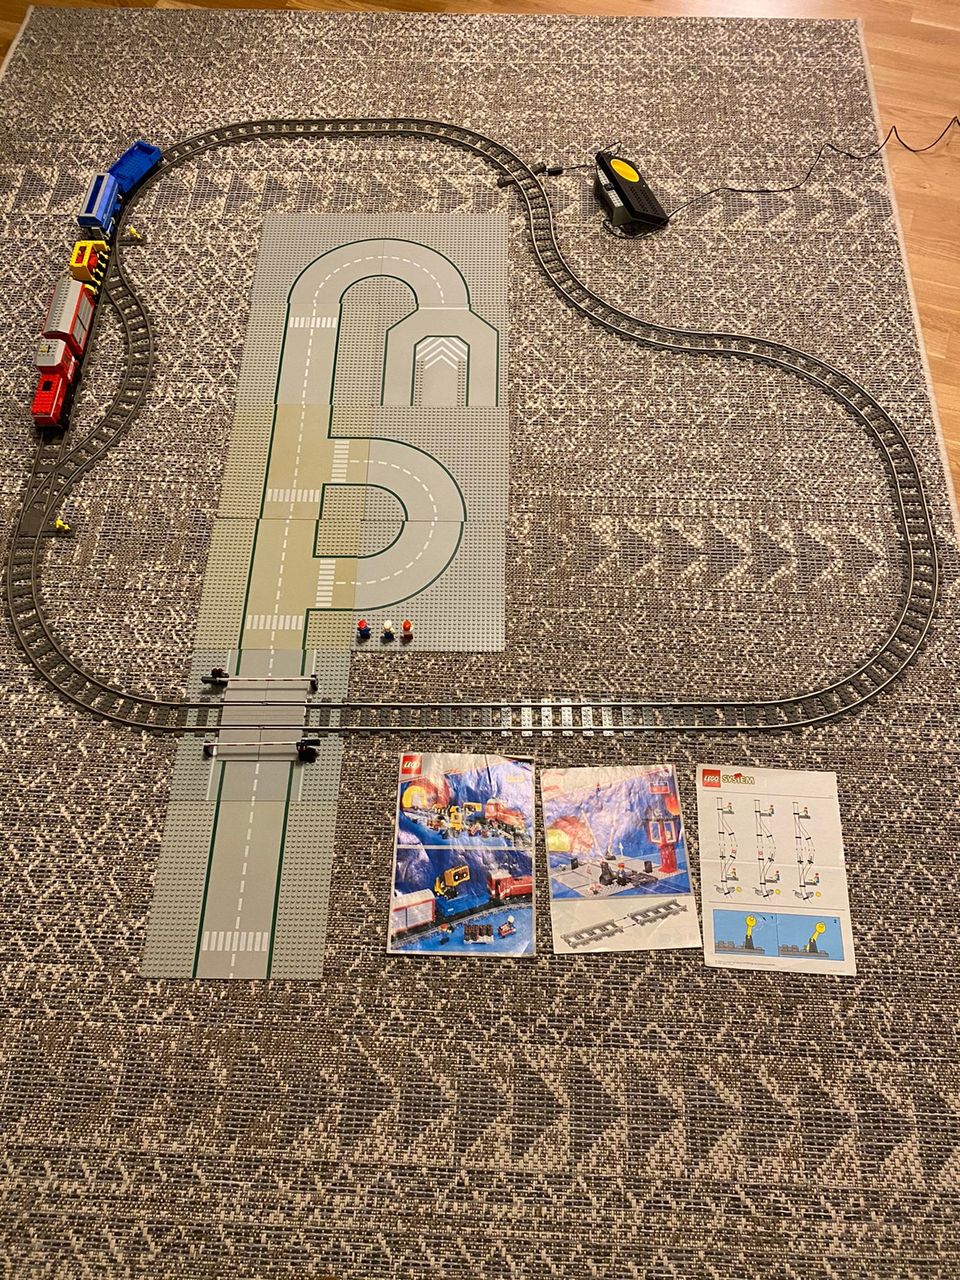 Lego sähköinen junarata